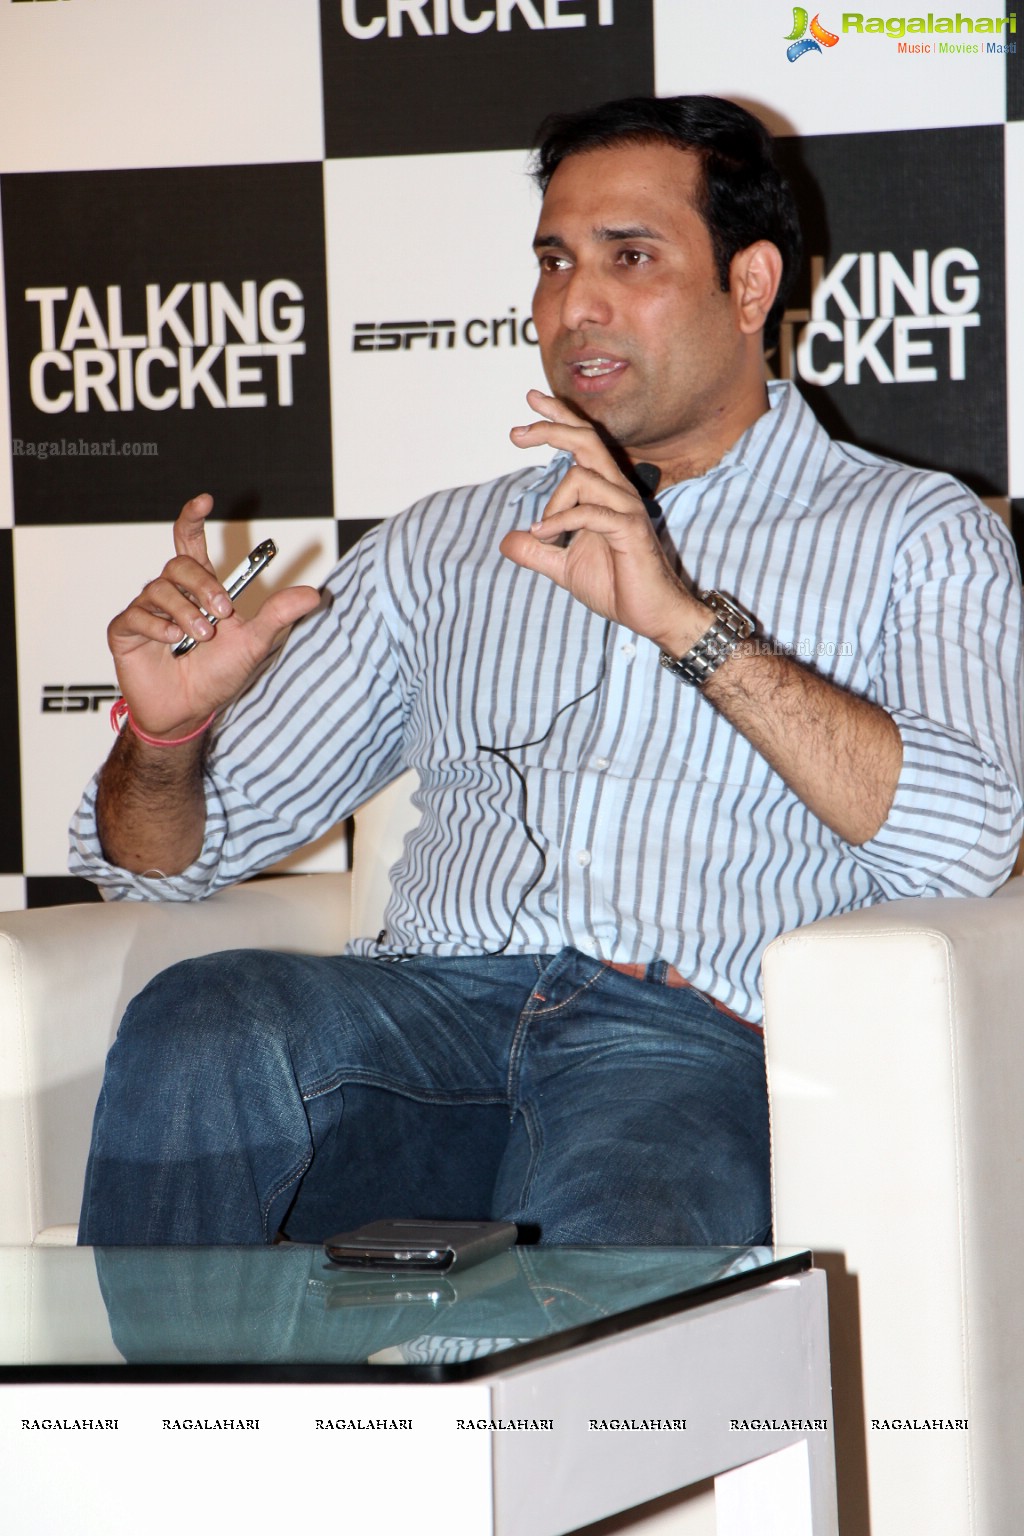 VVS Laxman launches ESPNcricinfo's Talking Cricket